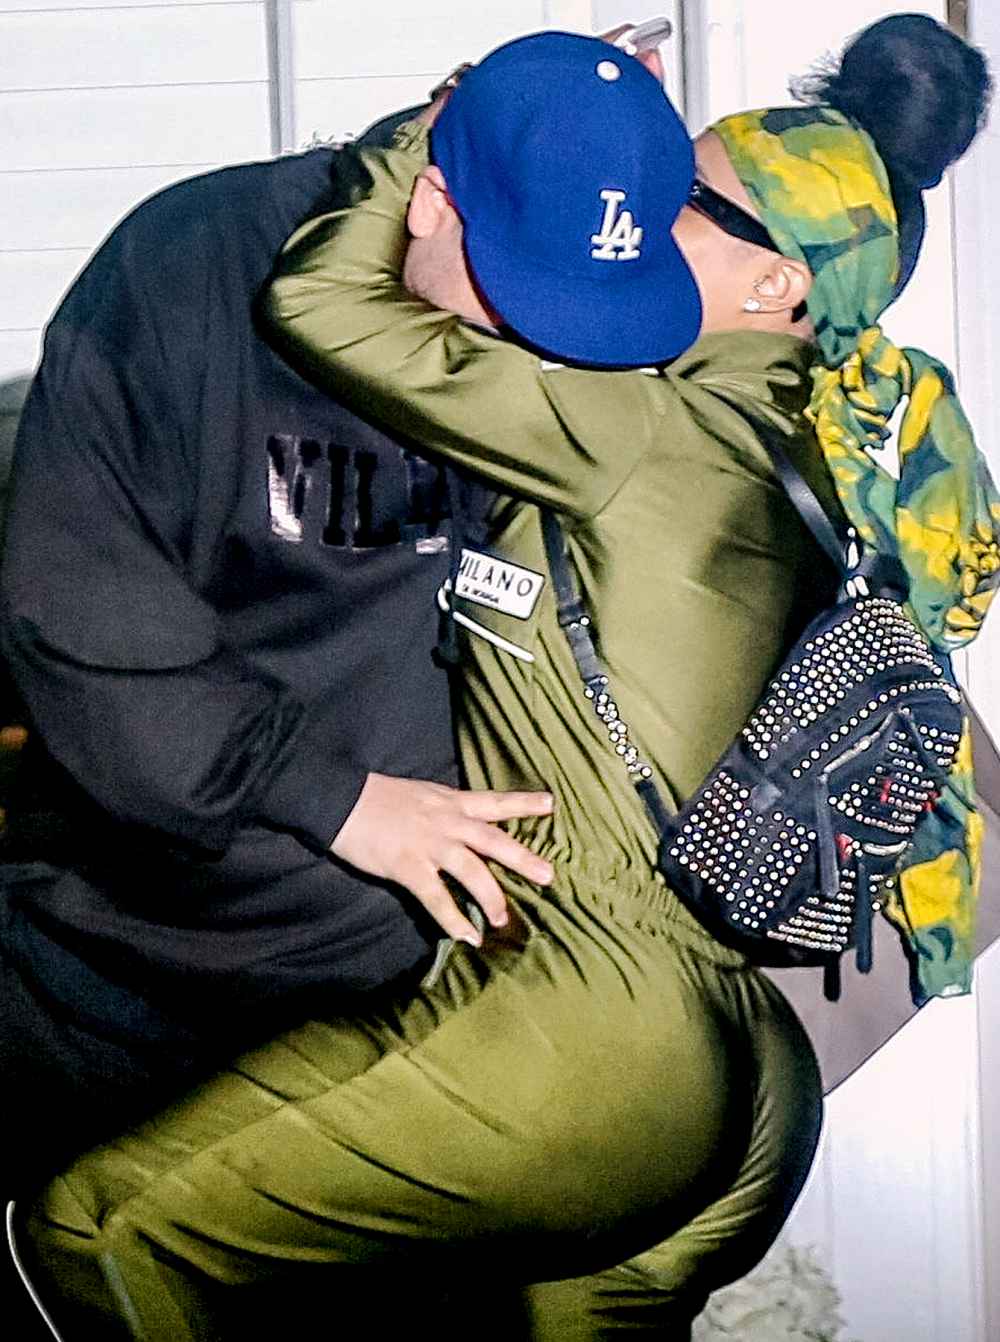 Blac Chyna gives Rob Kardashian a big kiss as they leave a salon in L.A.